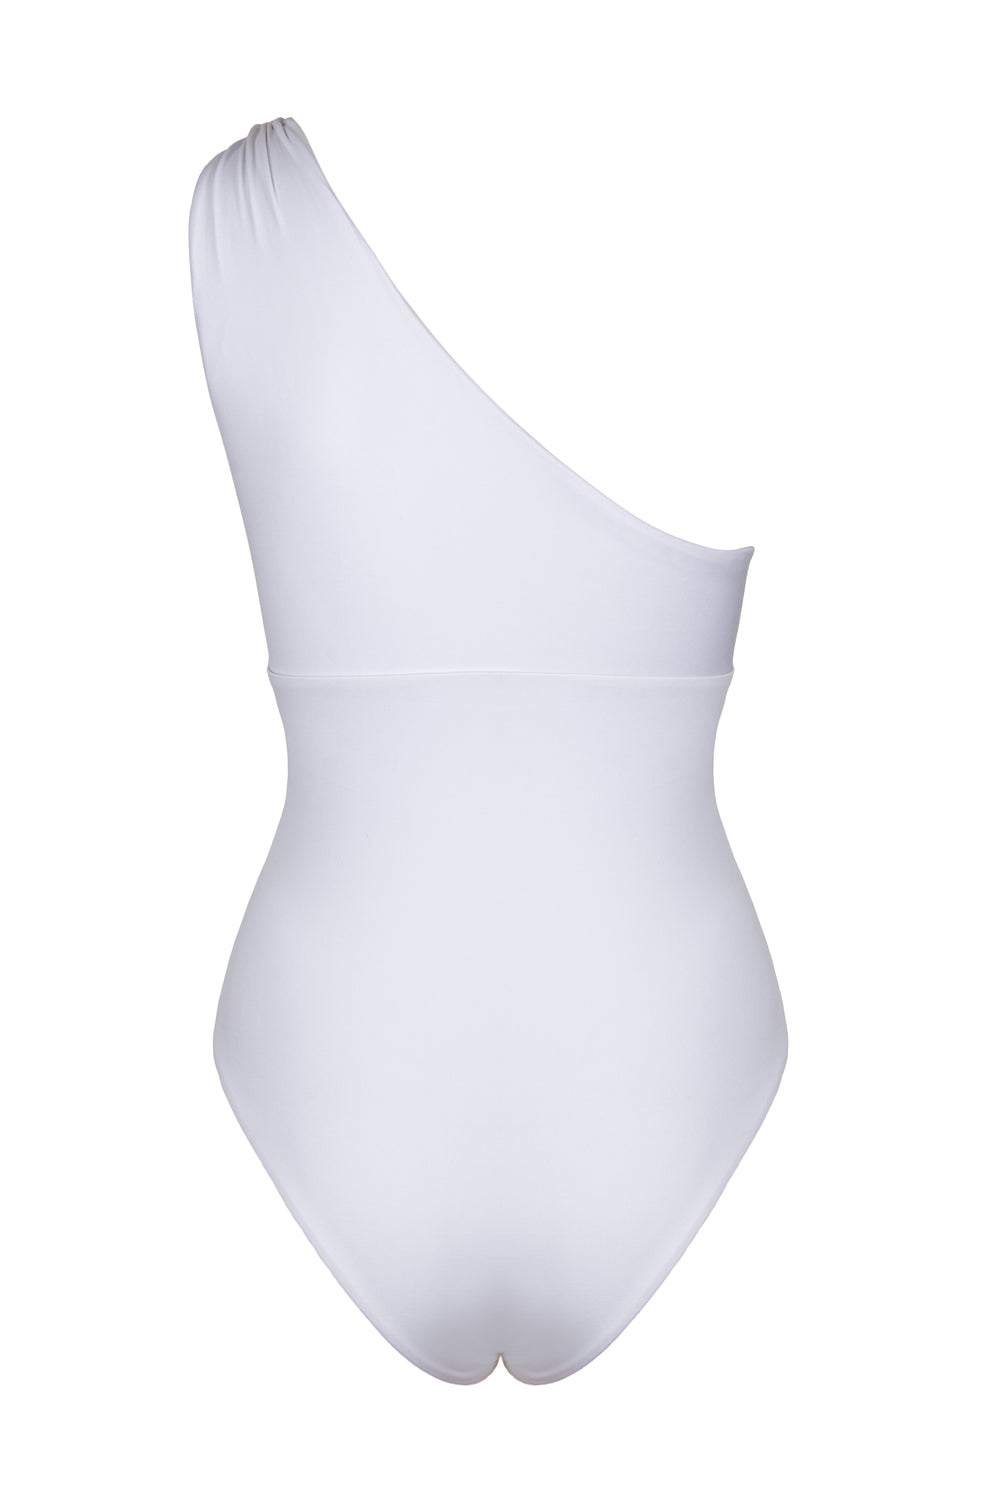 SILHOUETTE Swimsuit -  WHITE